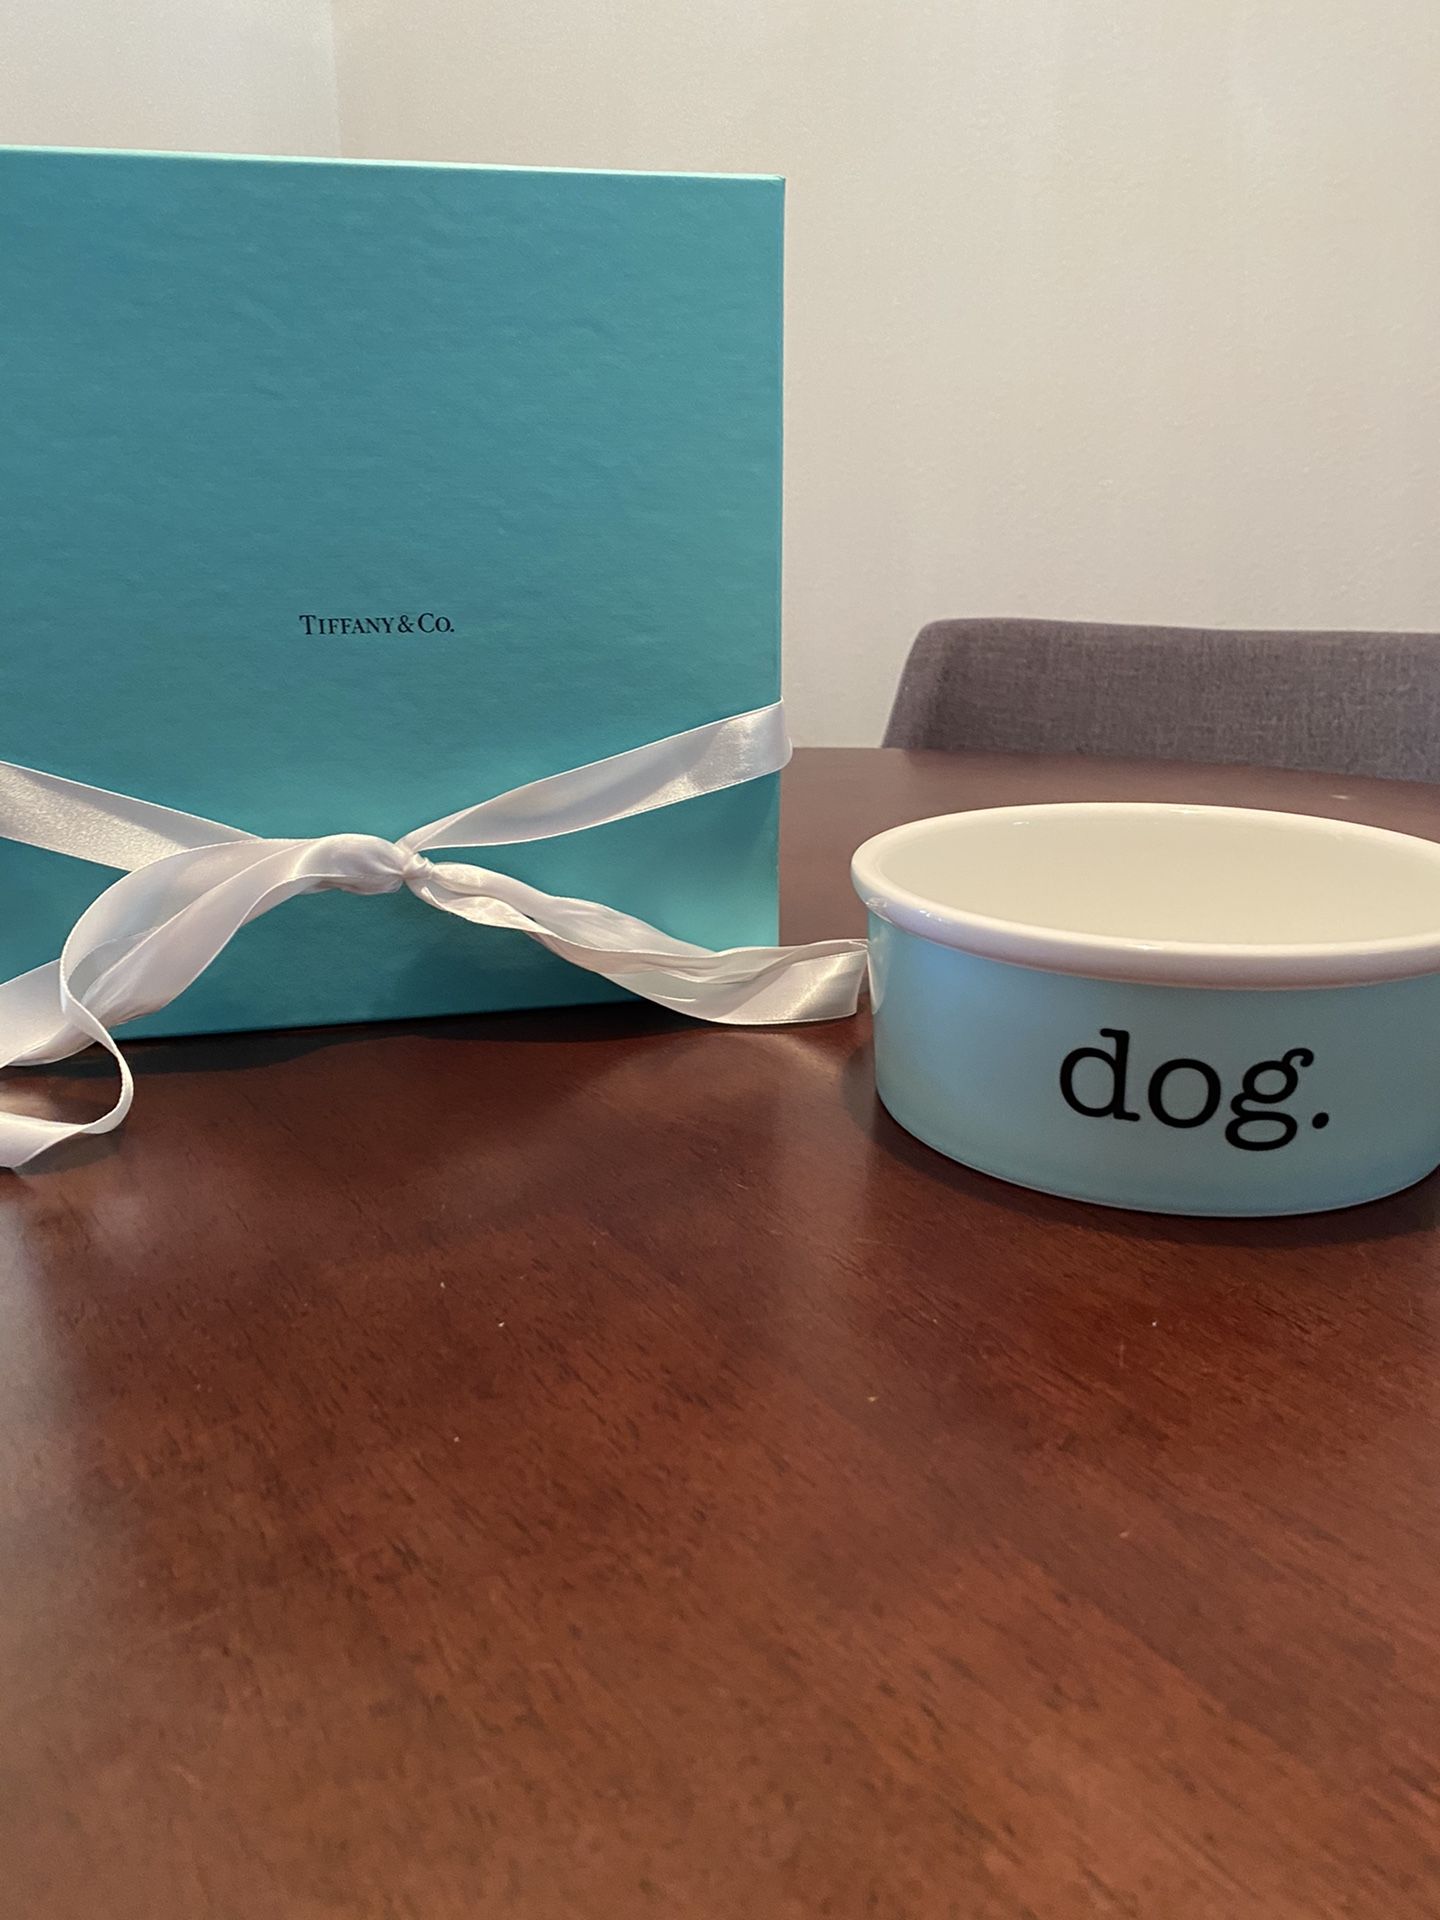 Tiffany & Co dog bowl